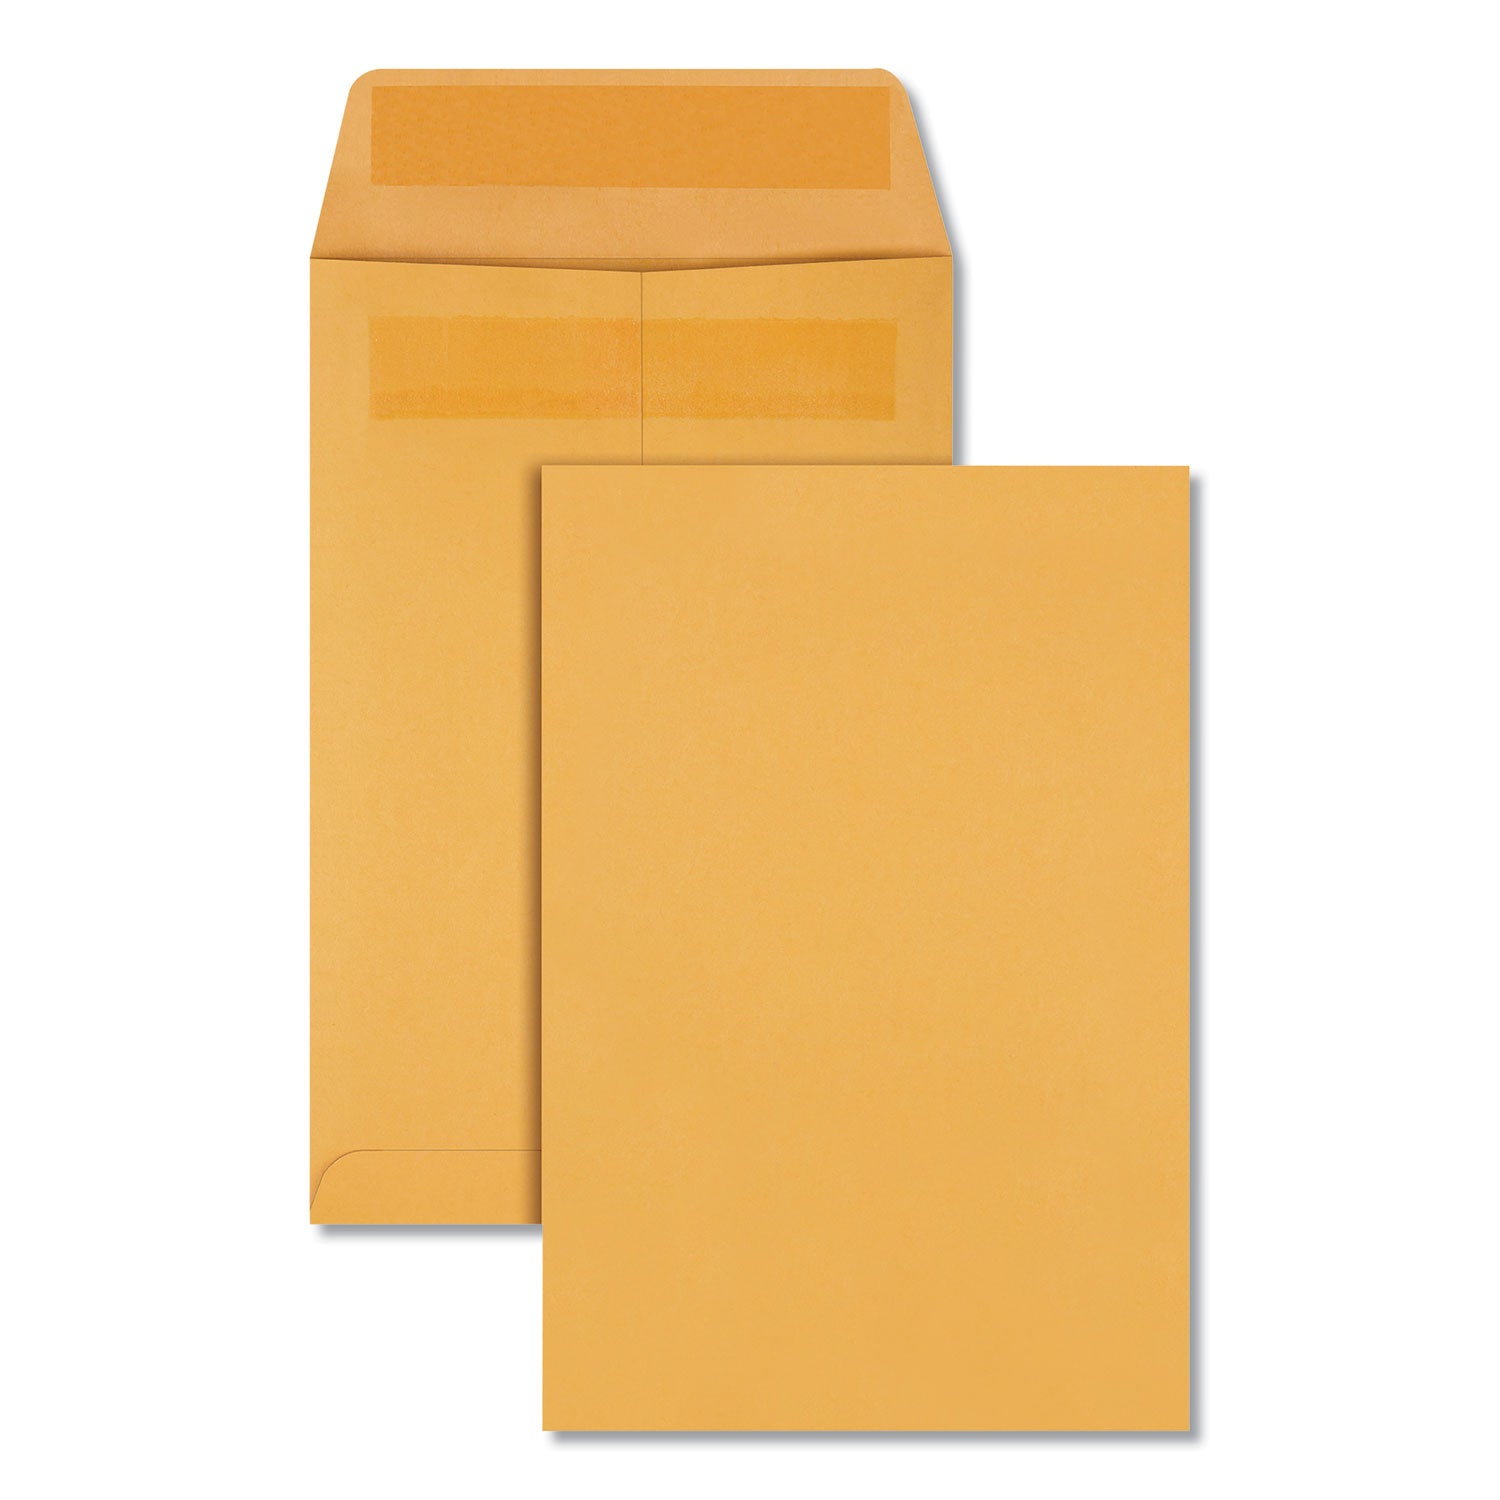 Redi-Seal Catalog Envelope, #1 3/4, Cheese Blade Flap, Redi-Seal Adhesive Closure, 6.5 x 9.5, Brown Kraft, 100/Box - 